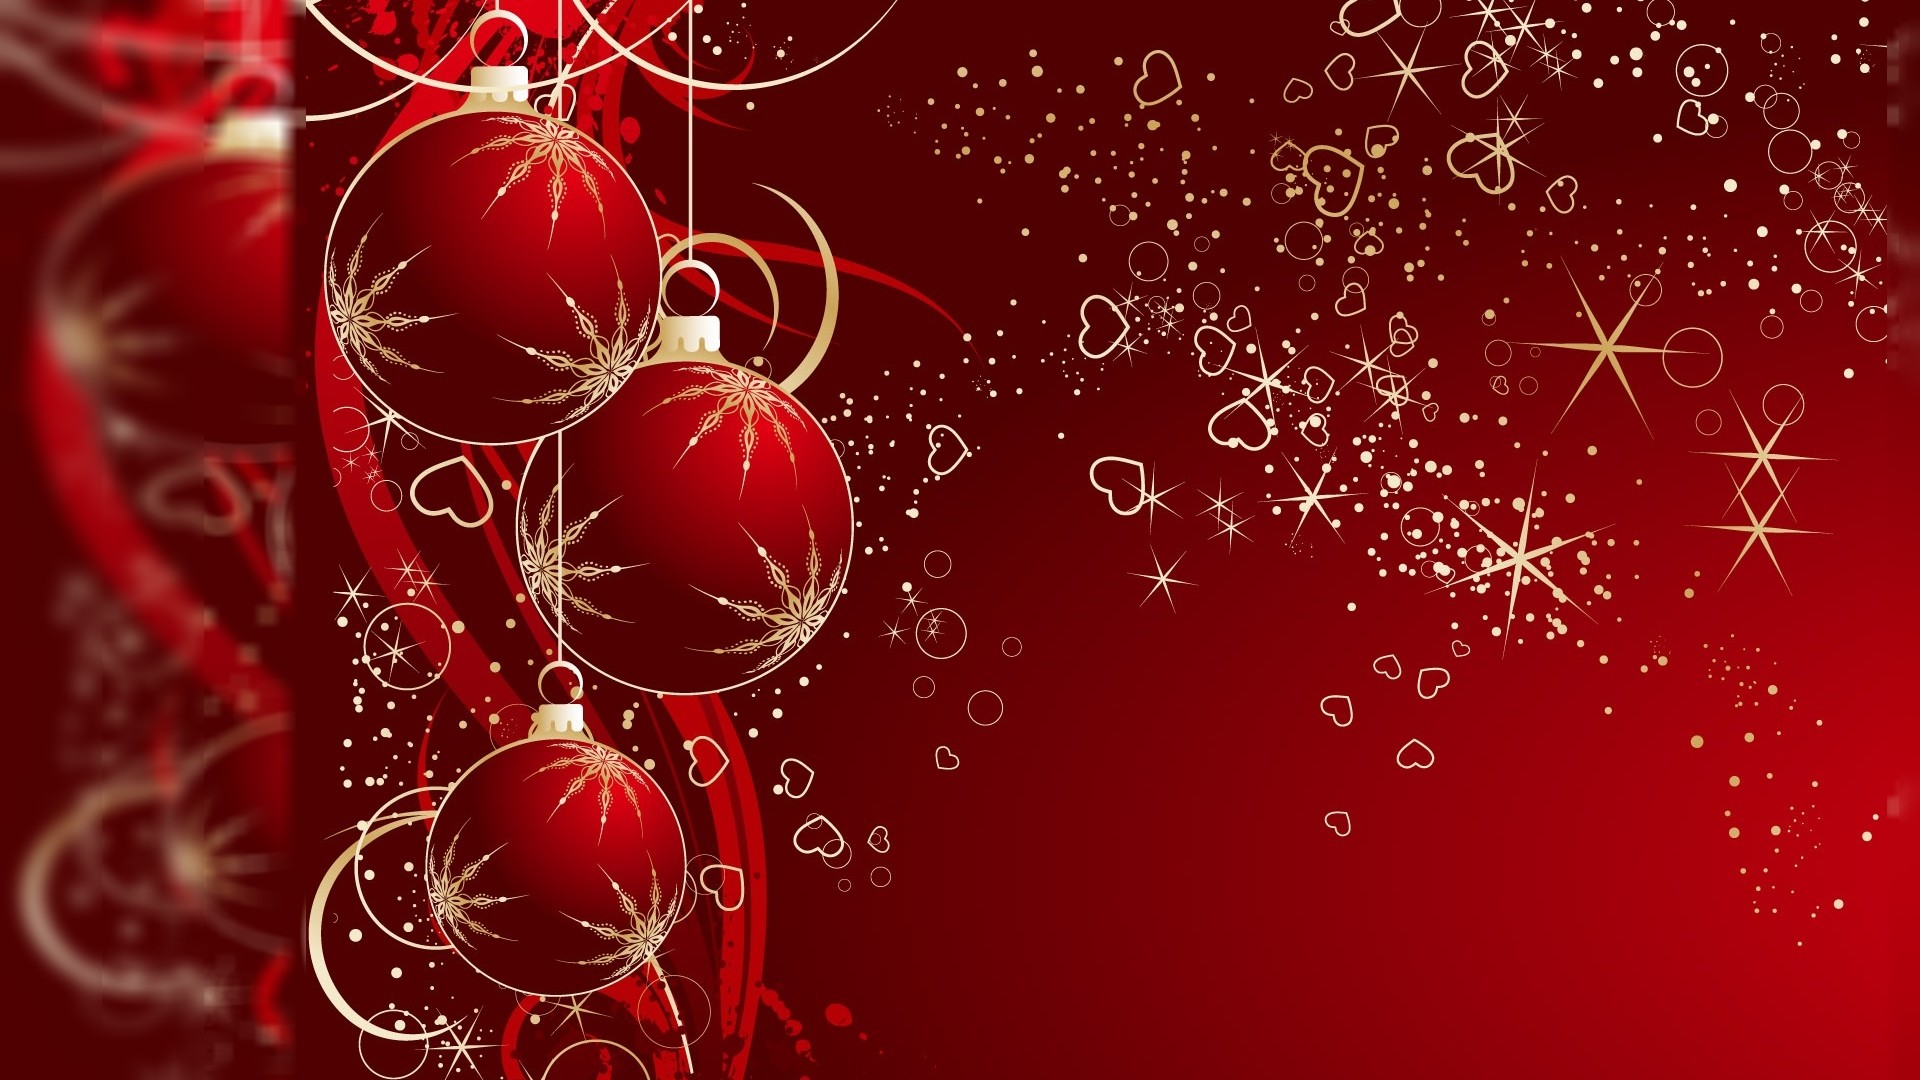 Christmas Desktop Backgrounds | Free Christmas Desktop Backgrounds for .